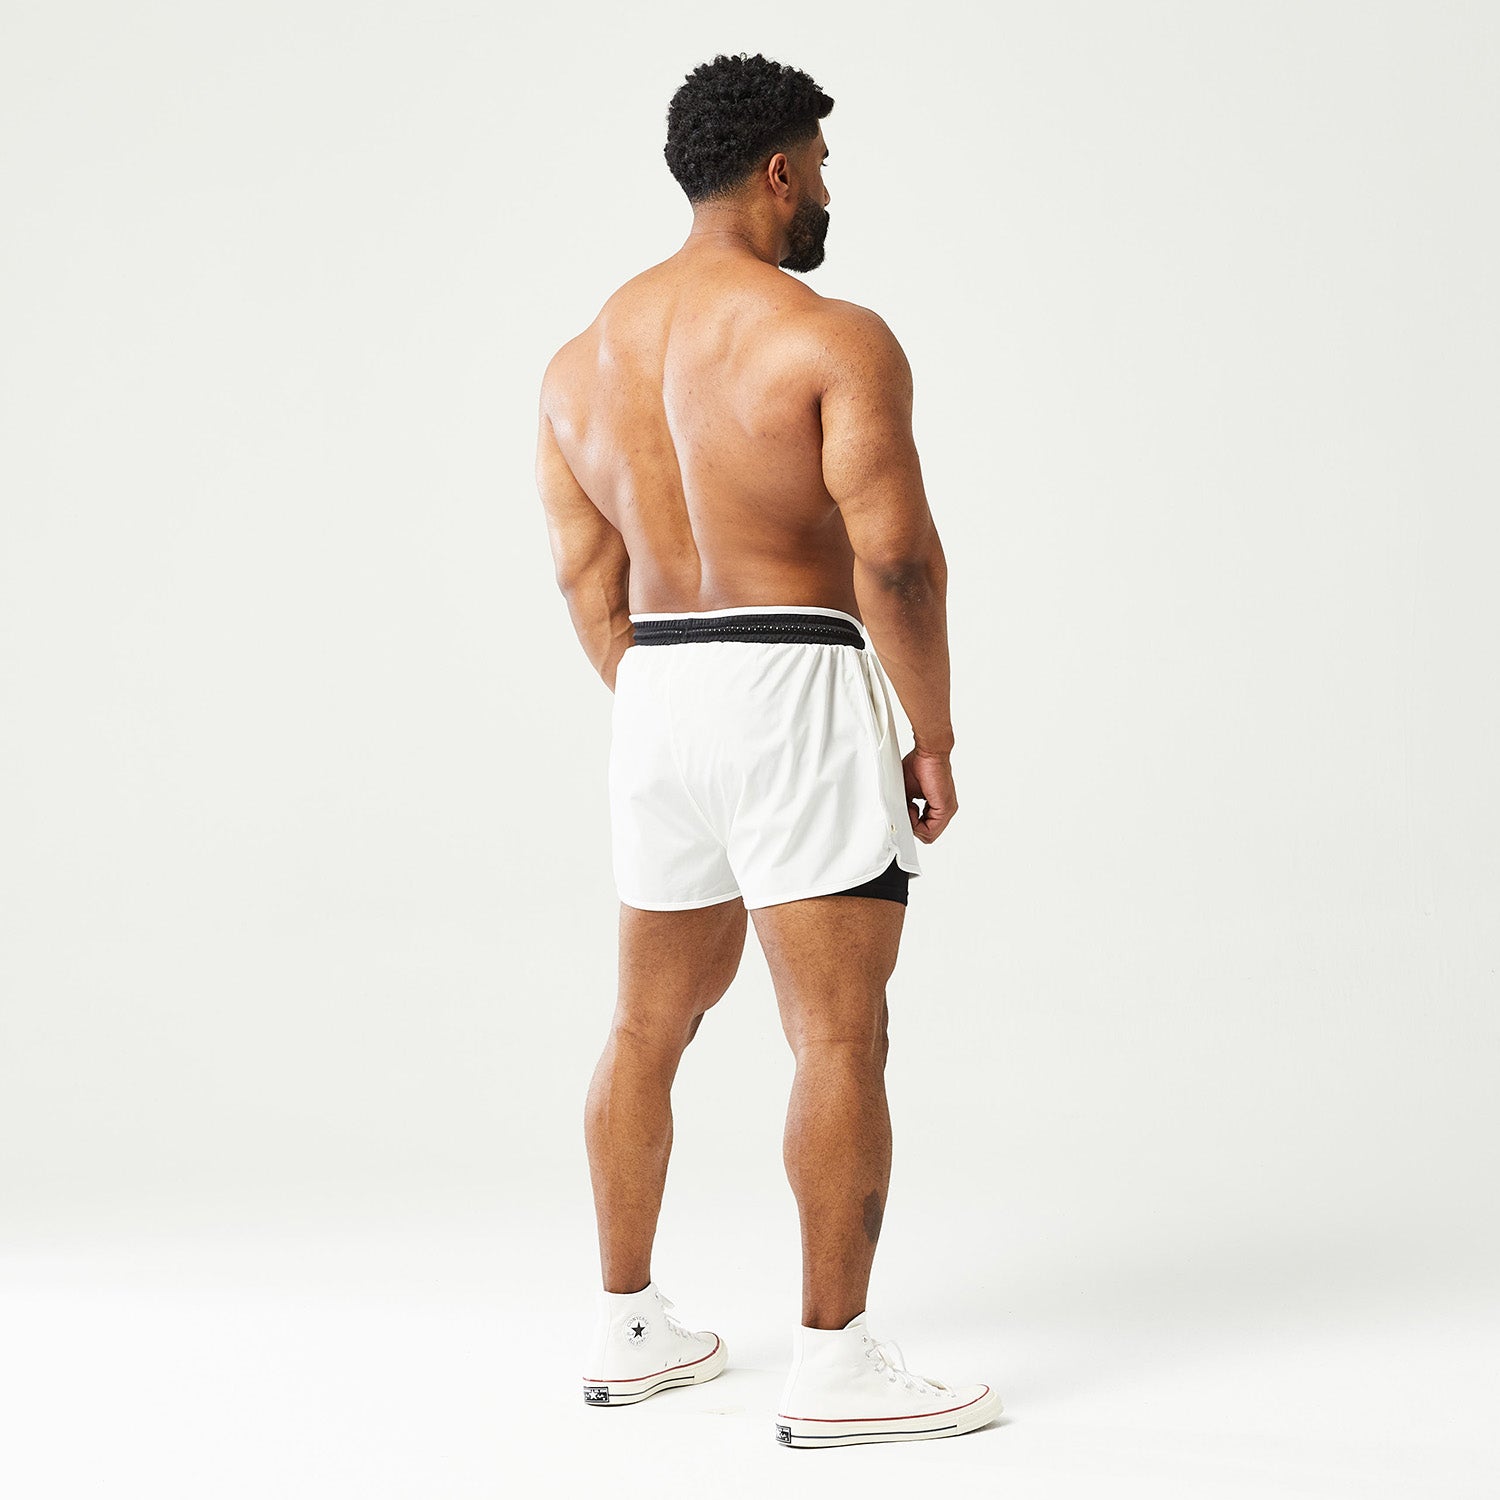 SQUATWOF-gym-wear-golden-era-2-in-1-shorts-white-workout-shorts-for-men